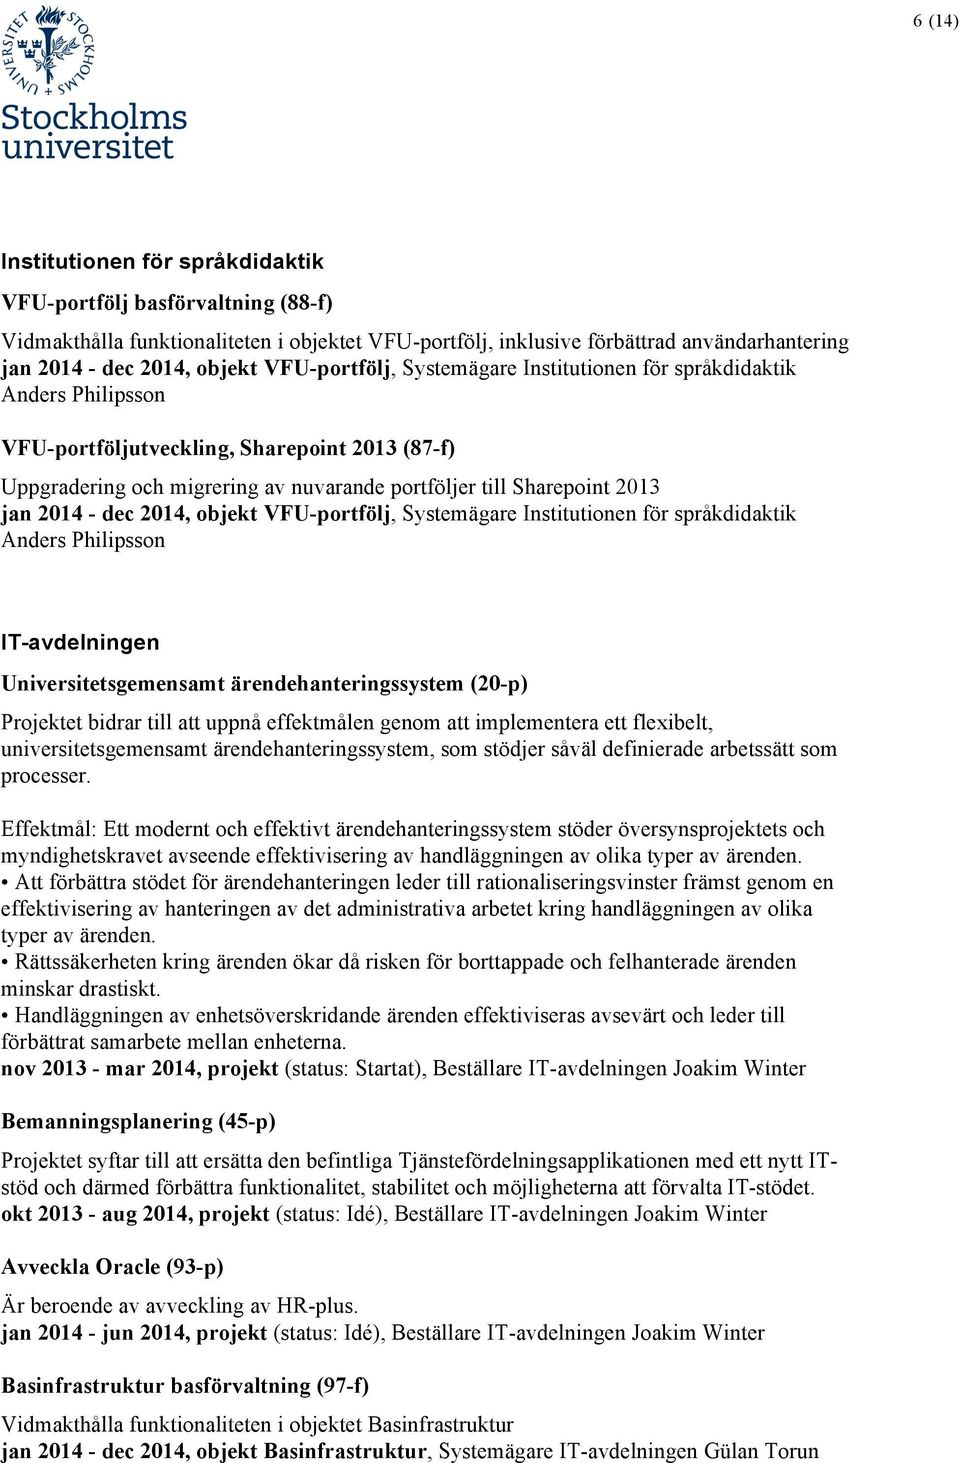 Aktuella centrala IT-satsningar vid Stockholms universitet - PDF ...